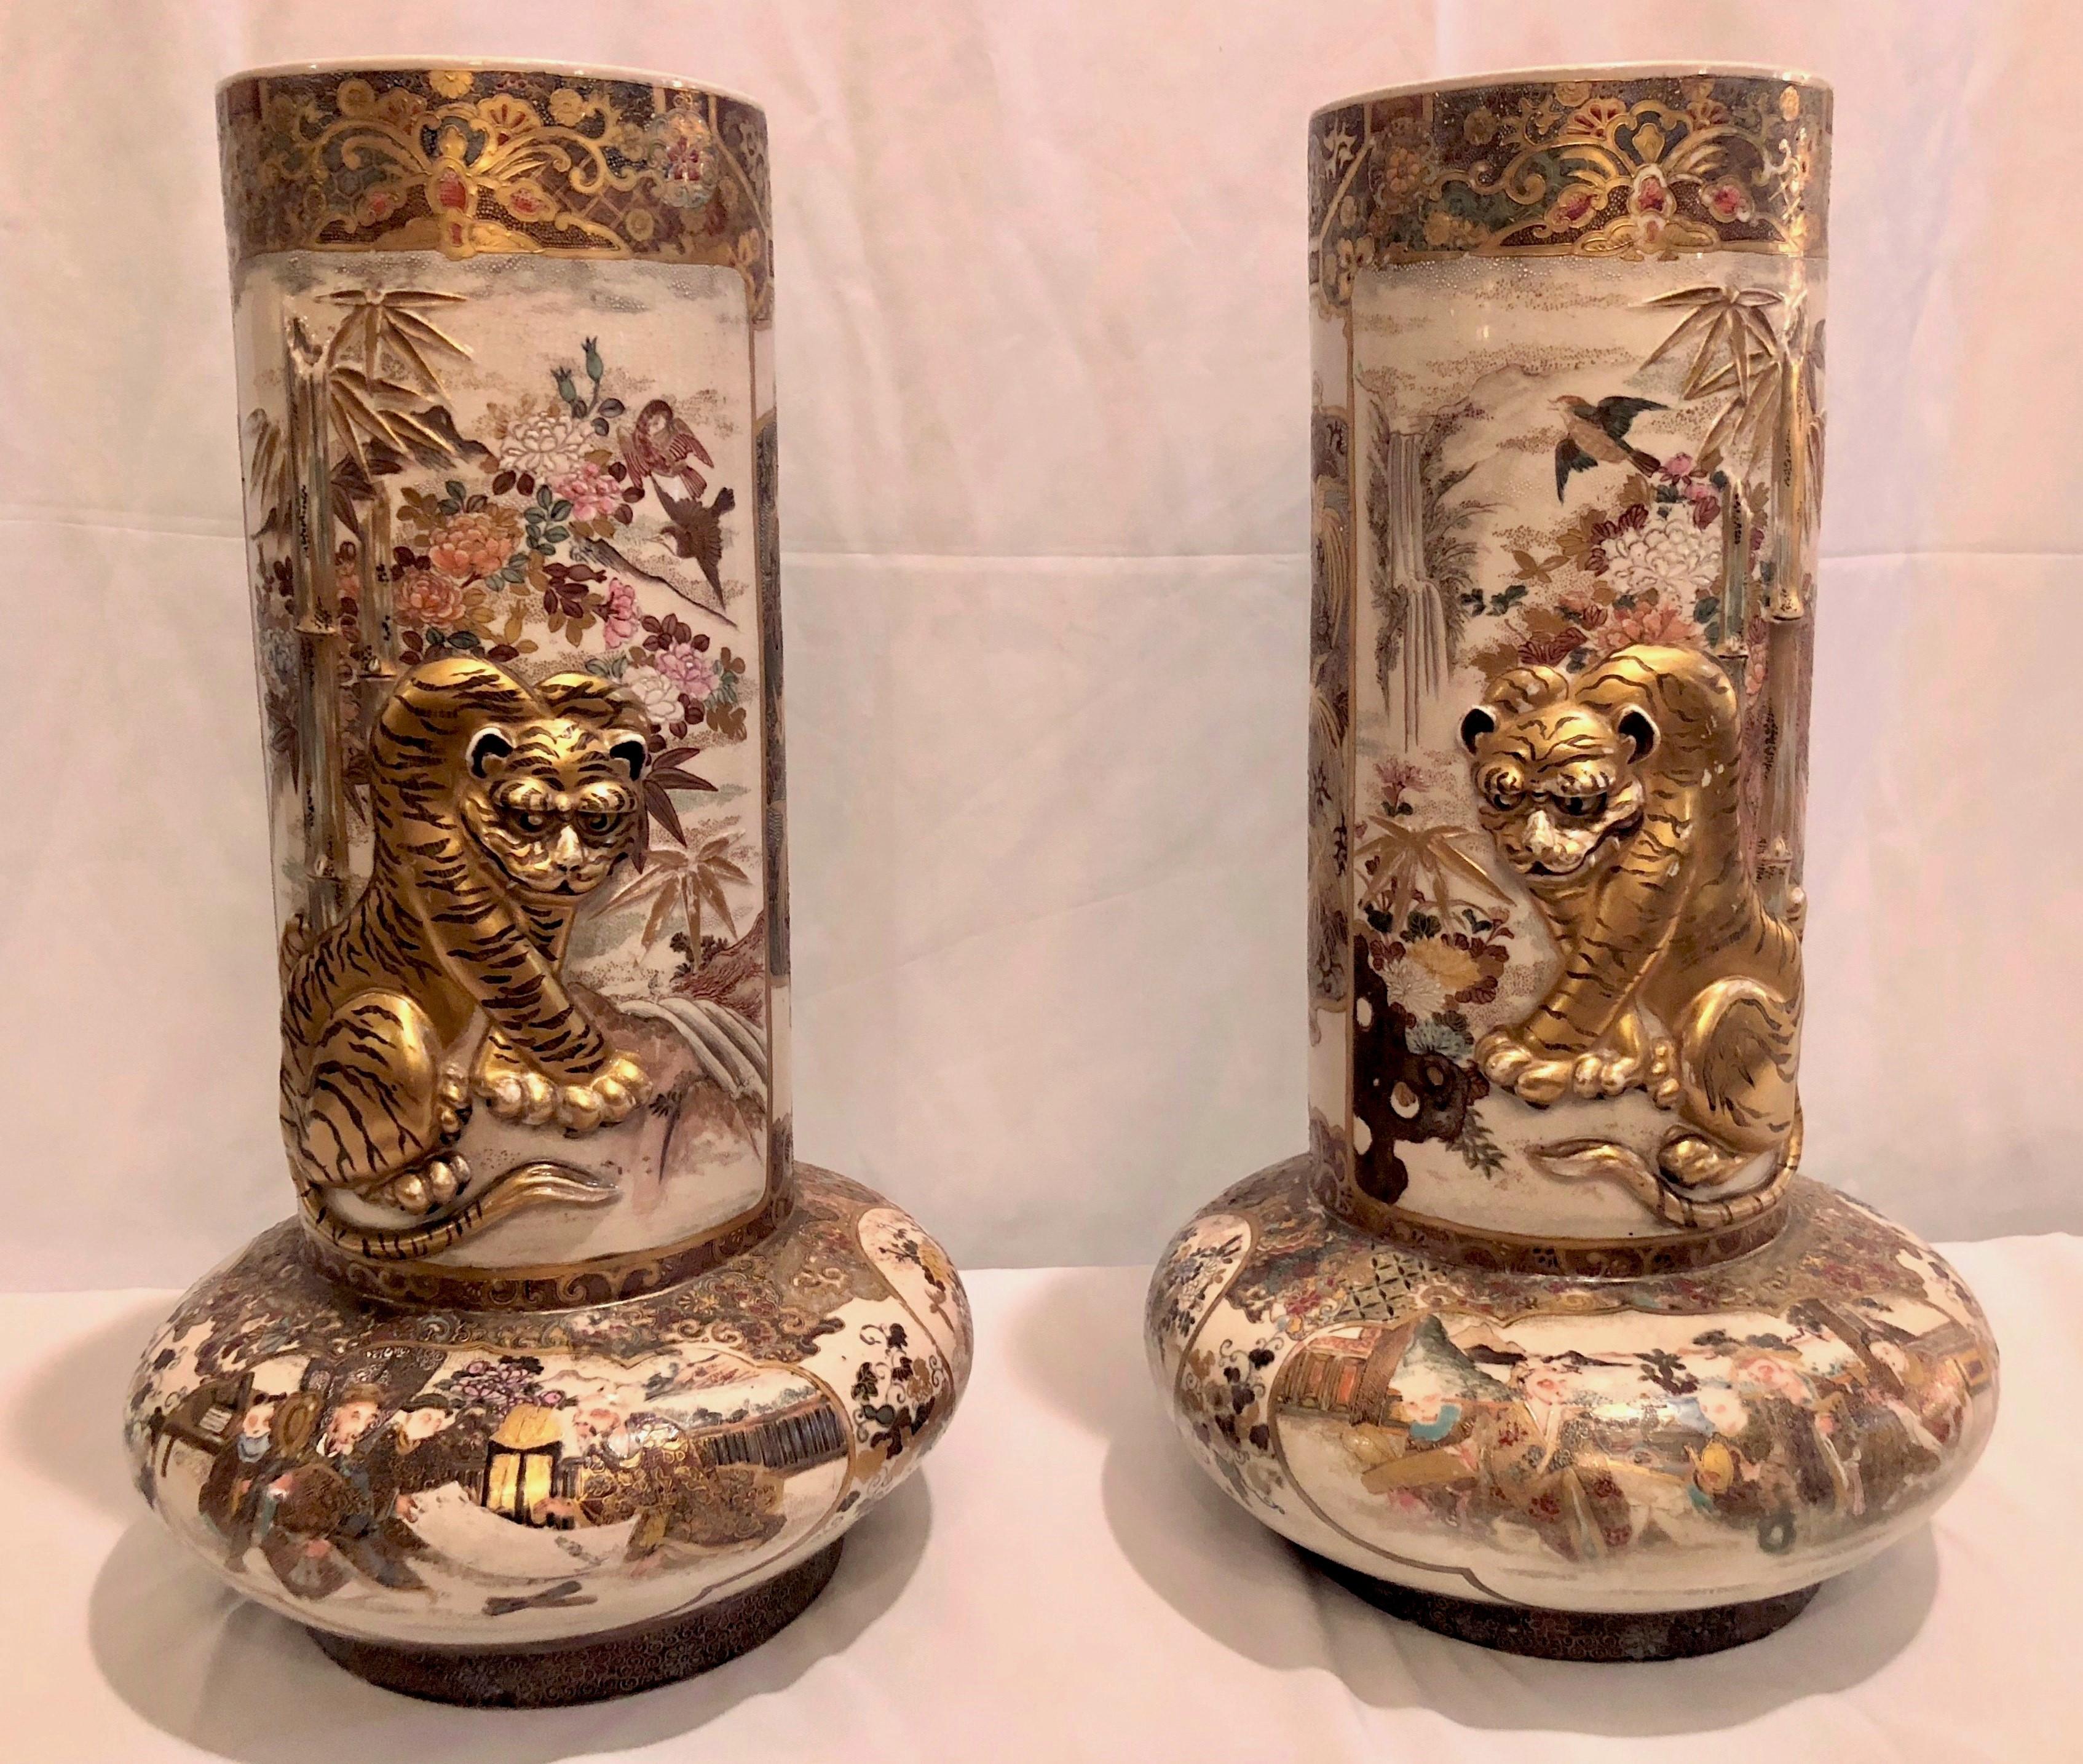 Pair of antique late 19th century satsuma porcelain urns.